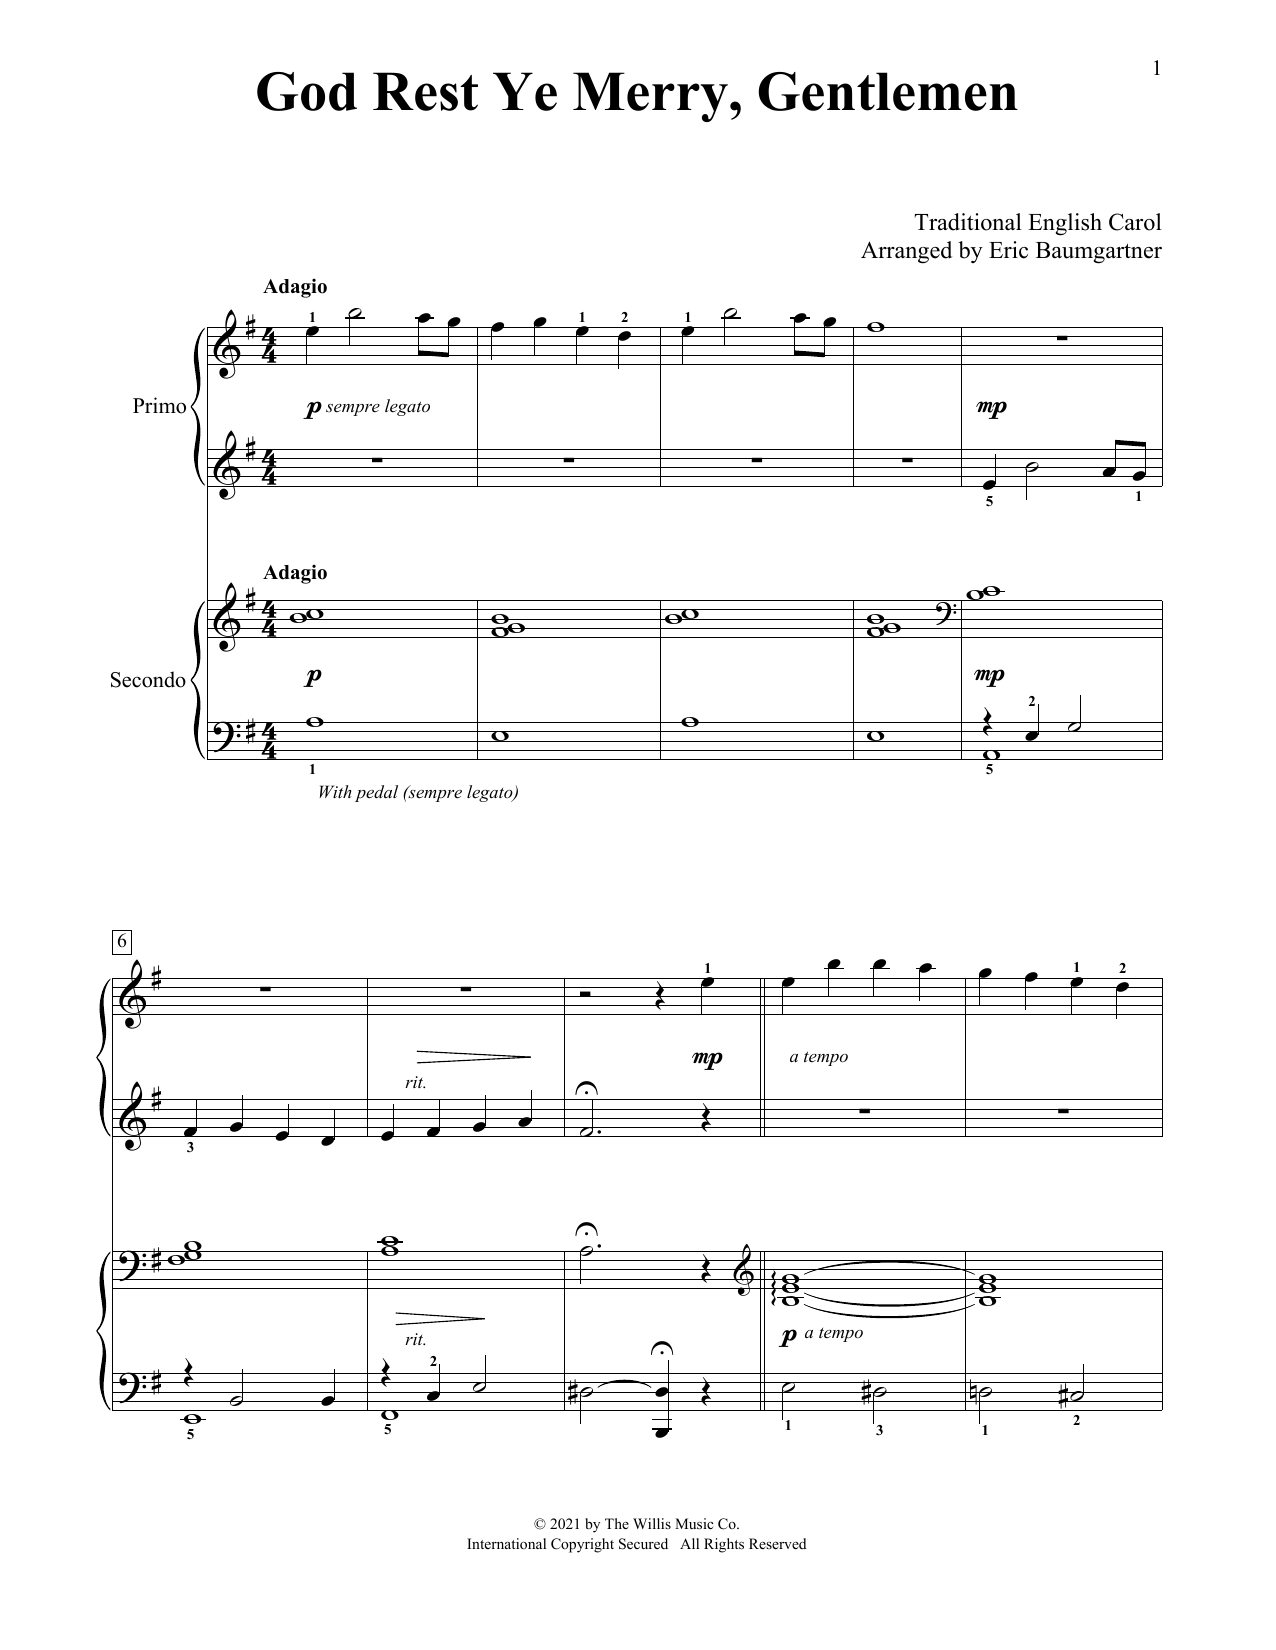 Traditional English Carol God Rest Ye Merry, Gentlemen (arr. Eric Baumgartner) sheet music notes and chords arranged for Piano Duet